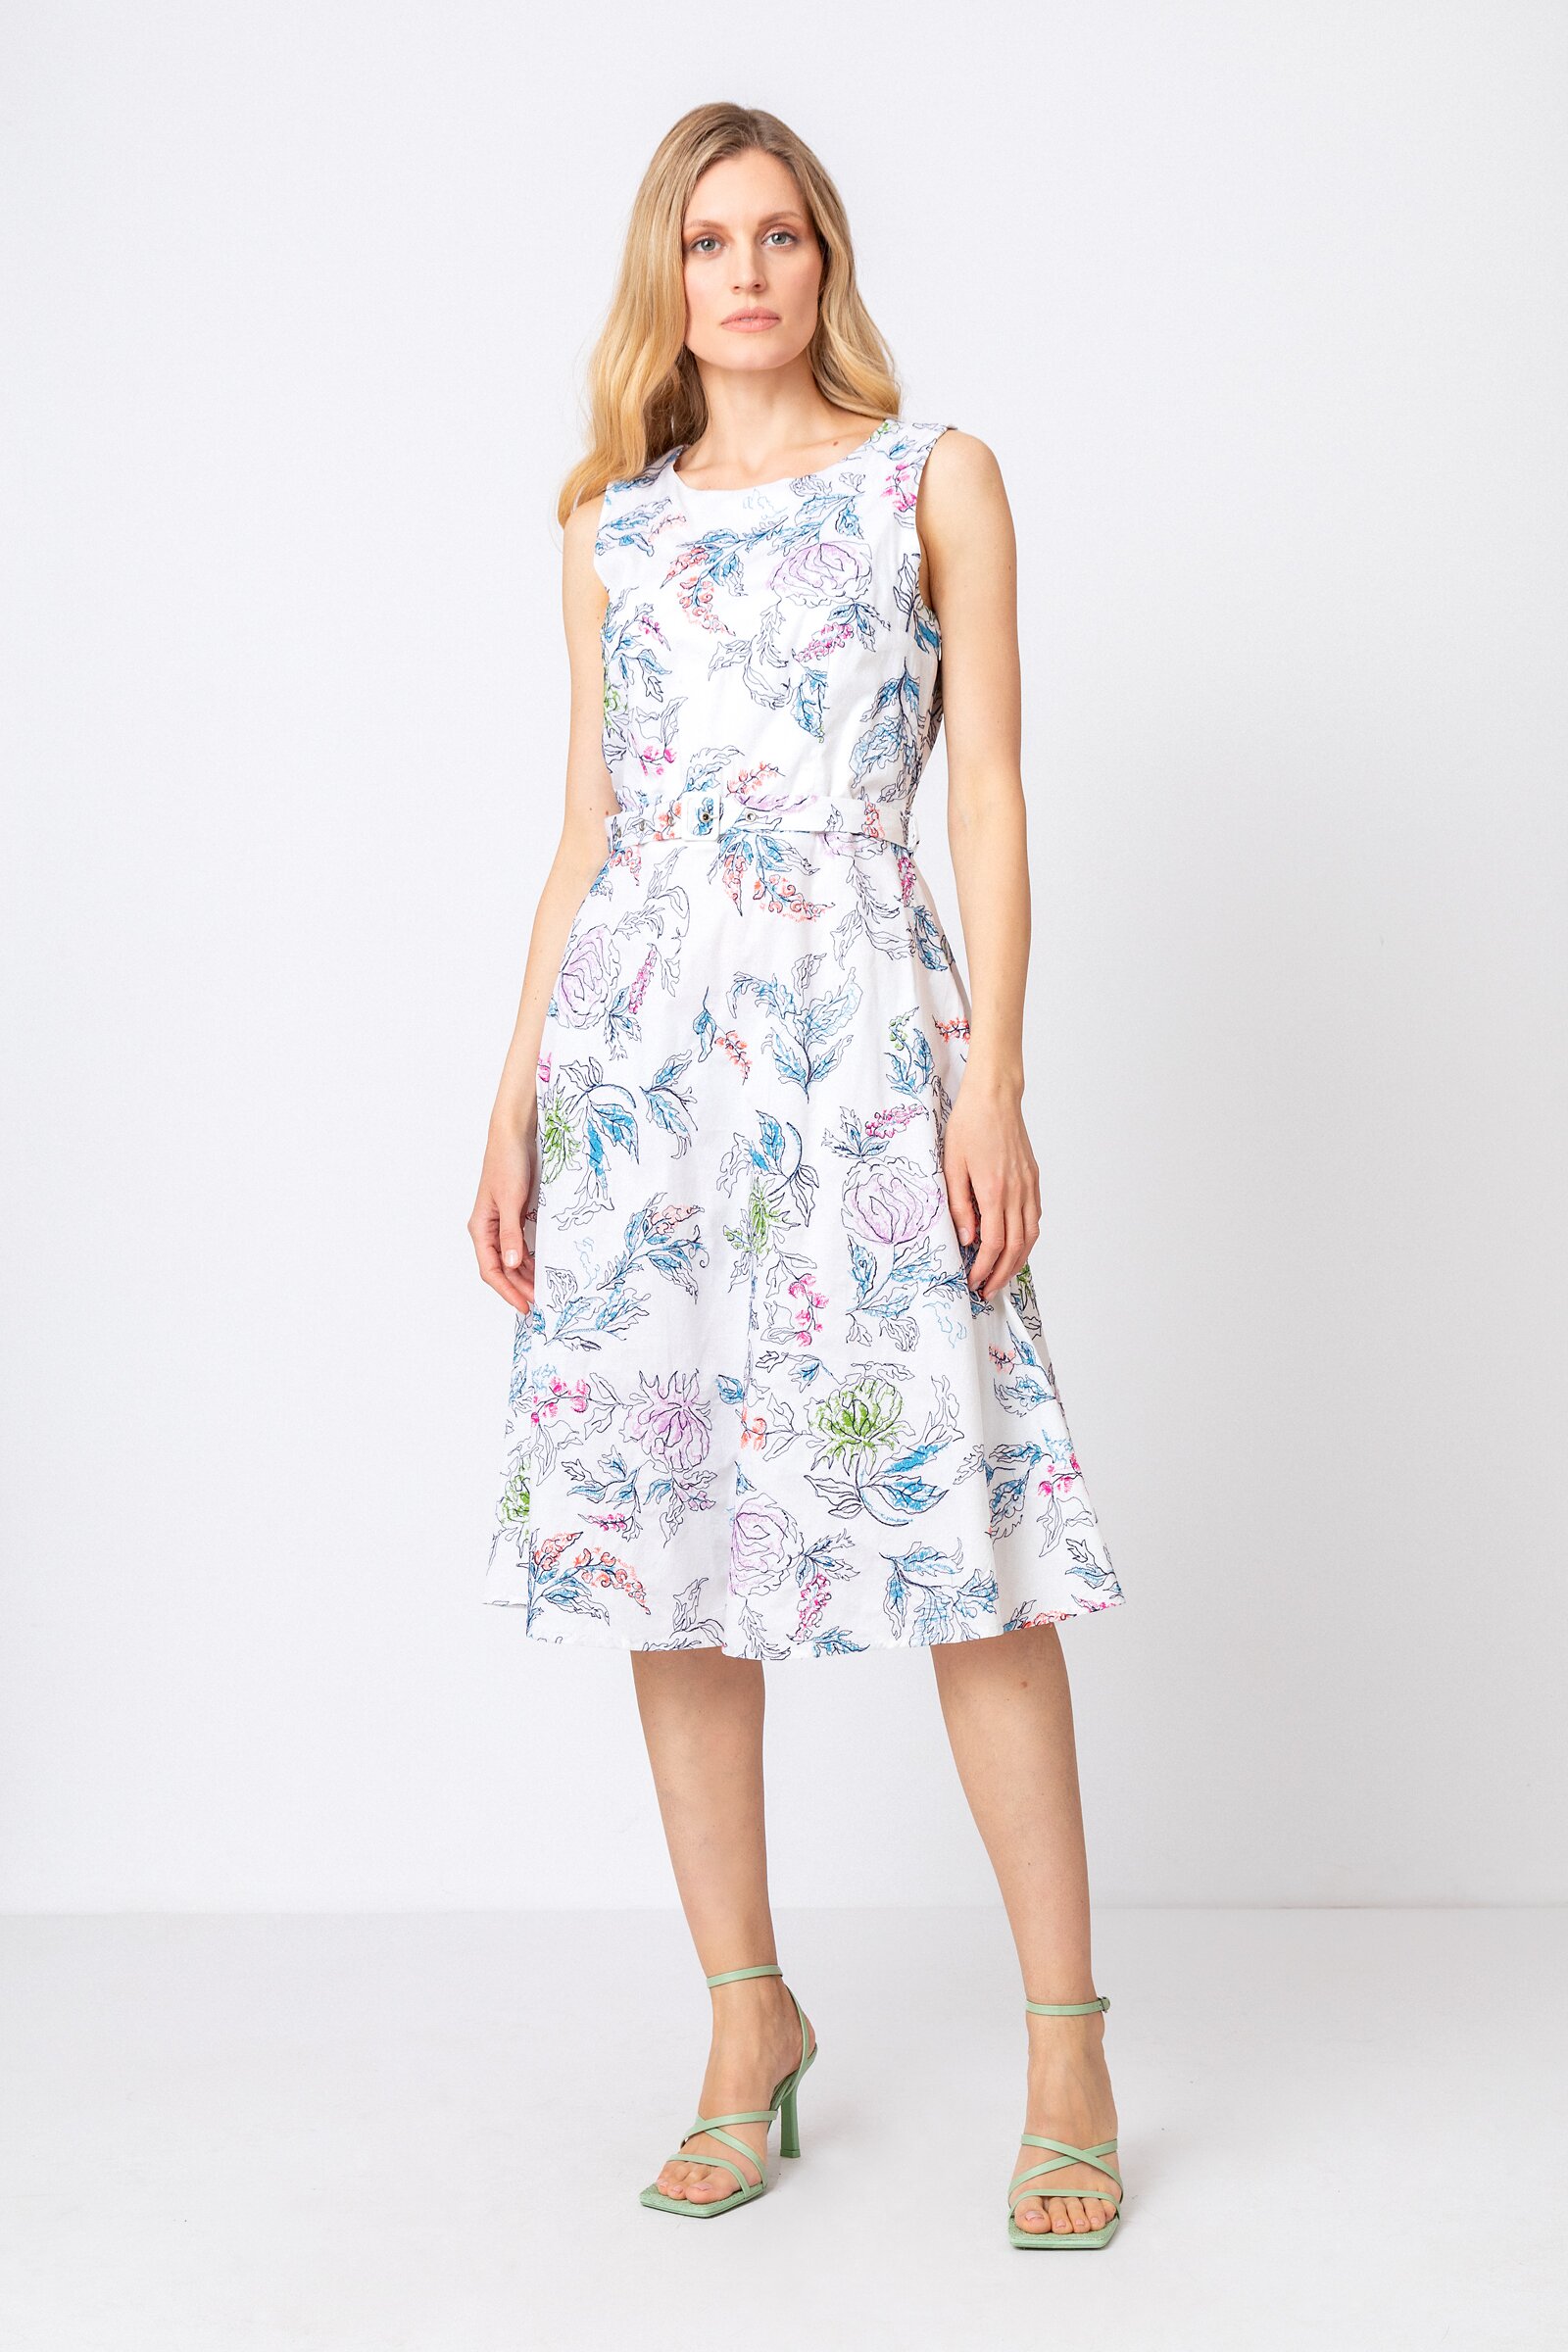 Embroidered Dress, Floral Motif - Dresses - Ivko Woman